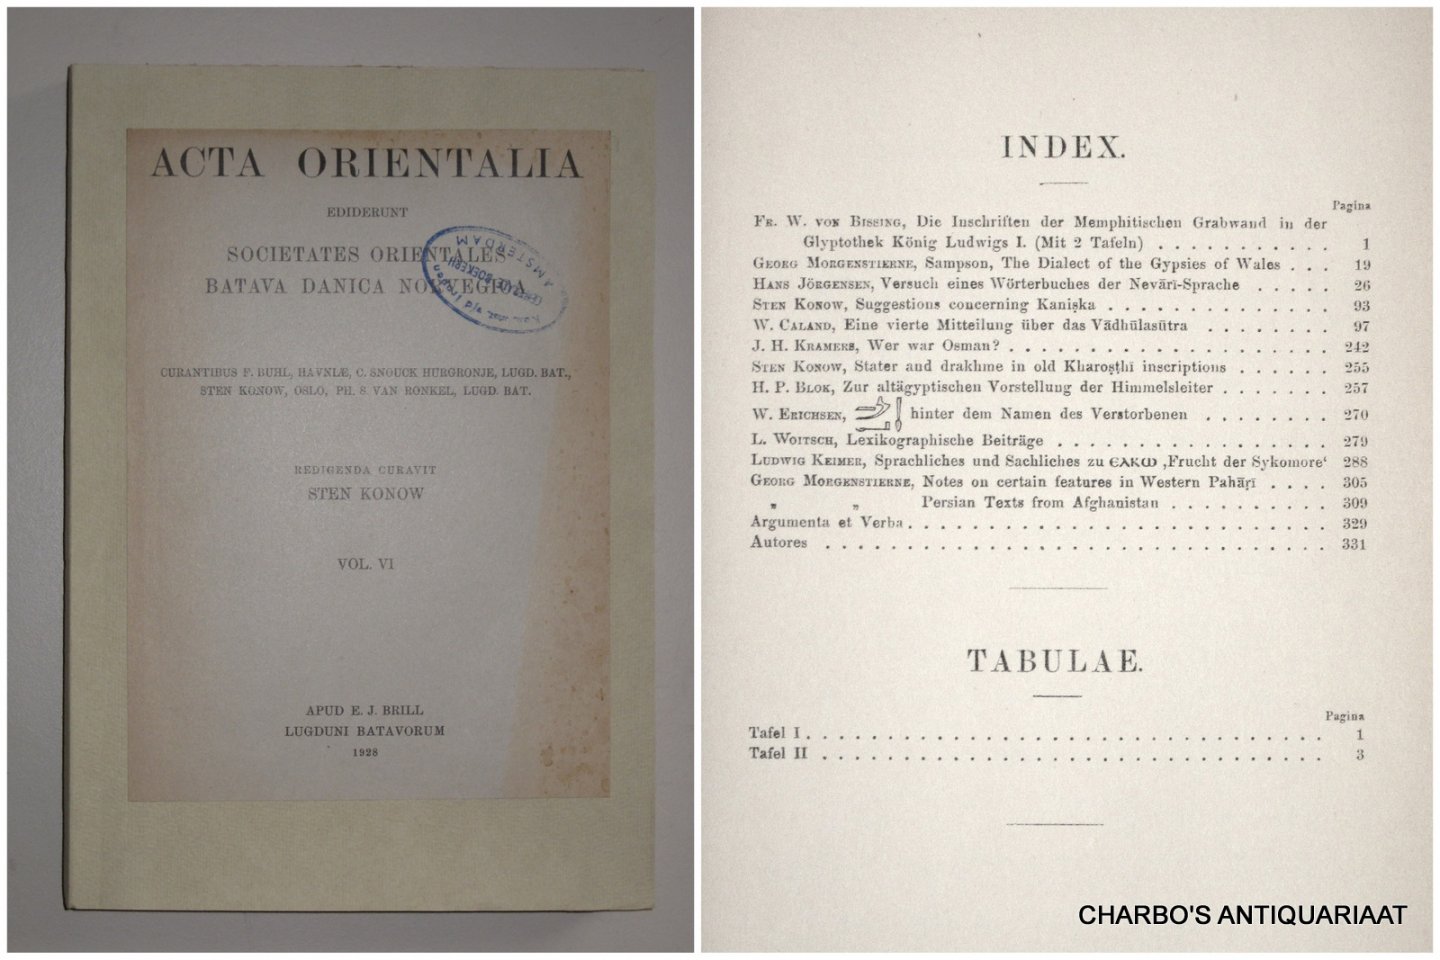 KONOW, STEN (ed.), - Acta Orientalia ediderunt societates orientales Batava, Danica, Norvegica. Vol. VI).